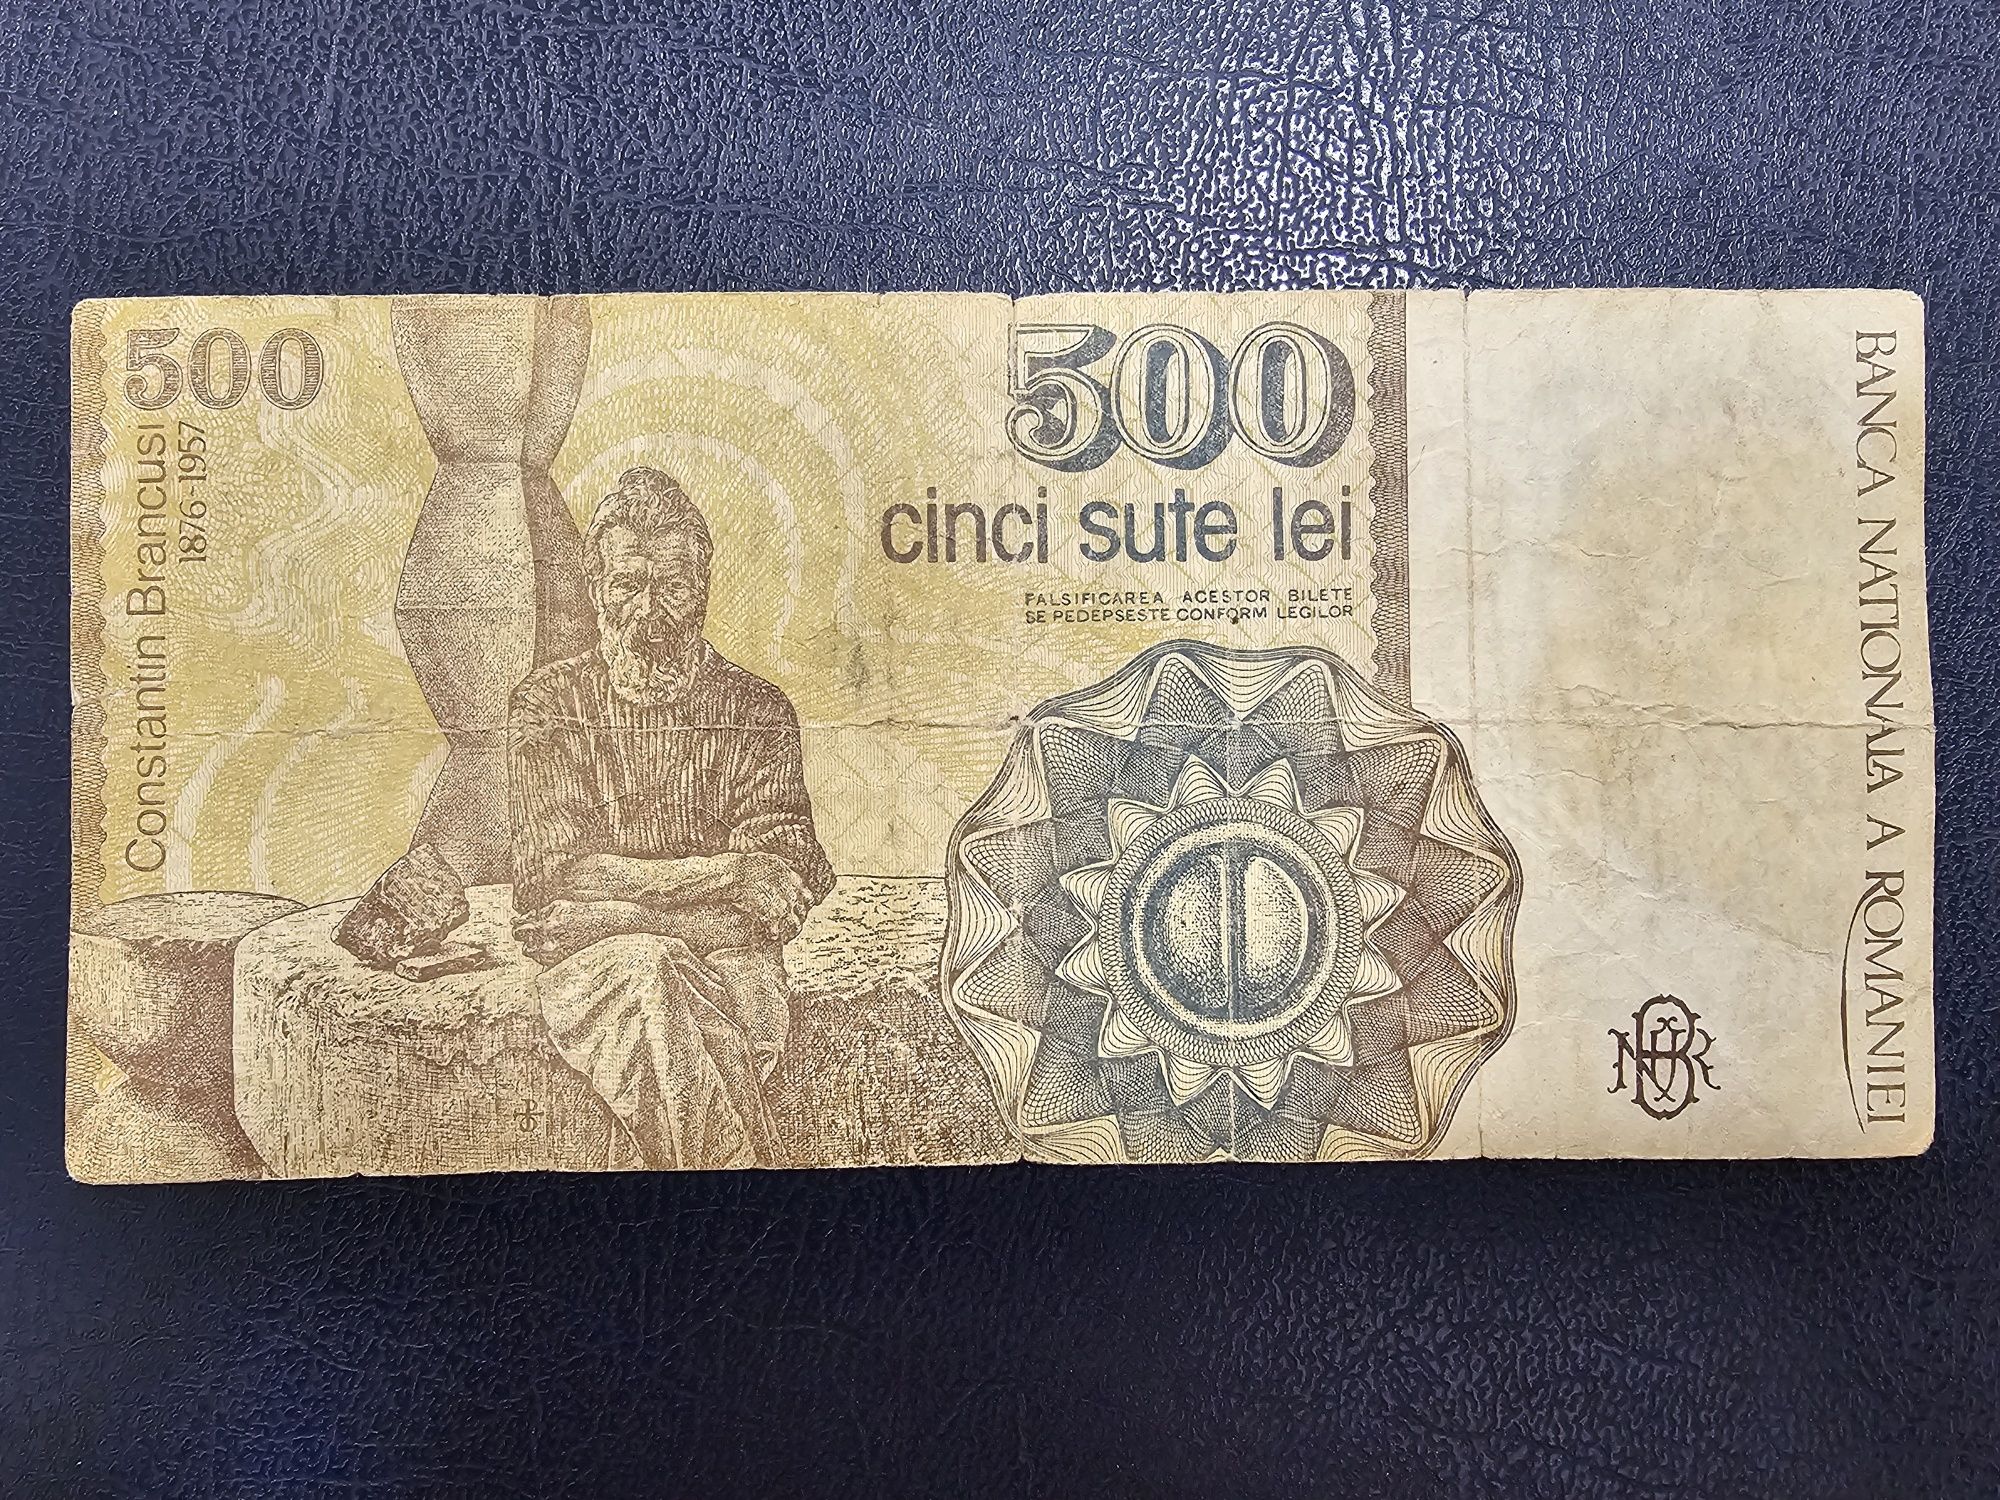 Bancnotă 500 lei 1991 Constantin Brancusi